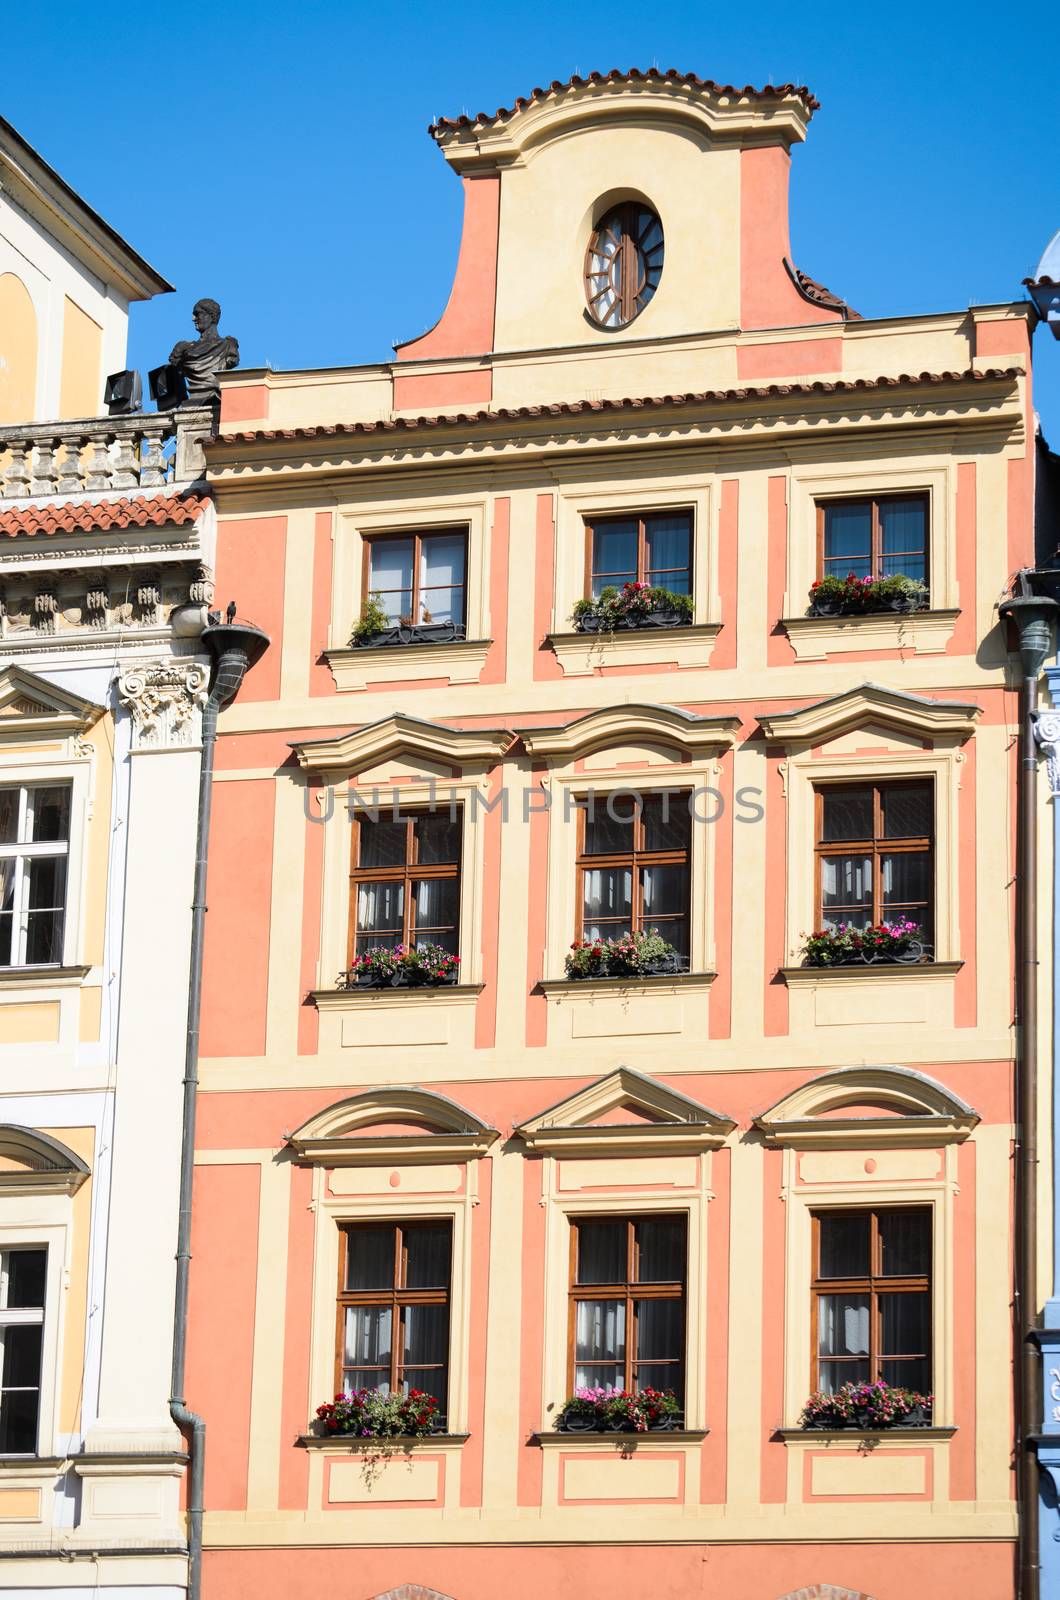 historical architecture in Prague, Czech republic